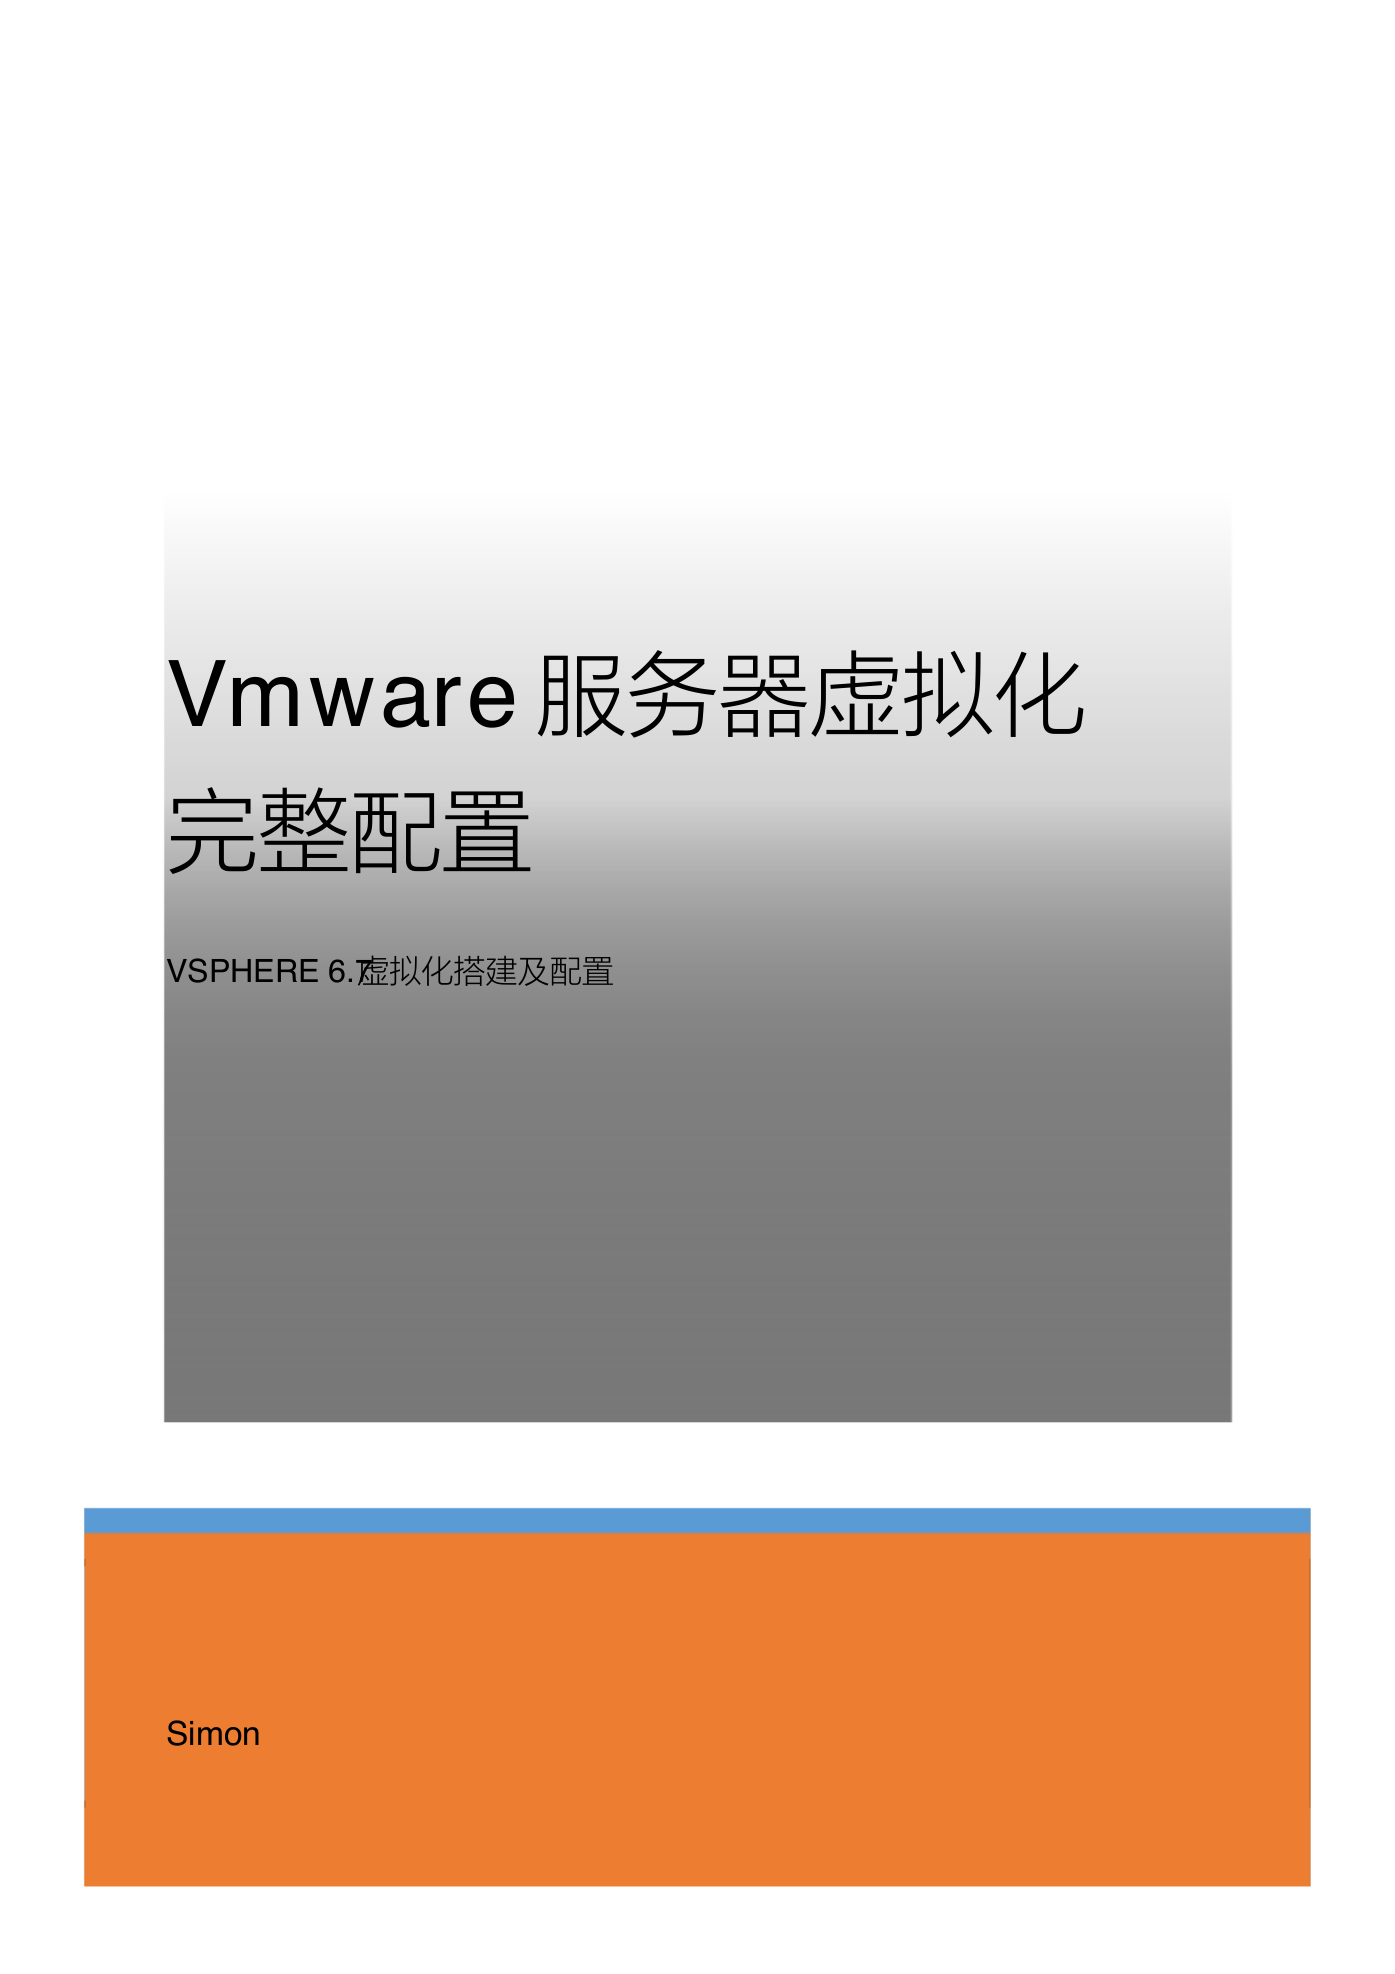 VMware vsphere6.7 虚拟化完整详细配置手册.pdf